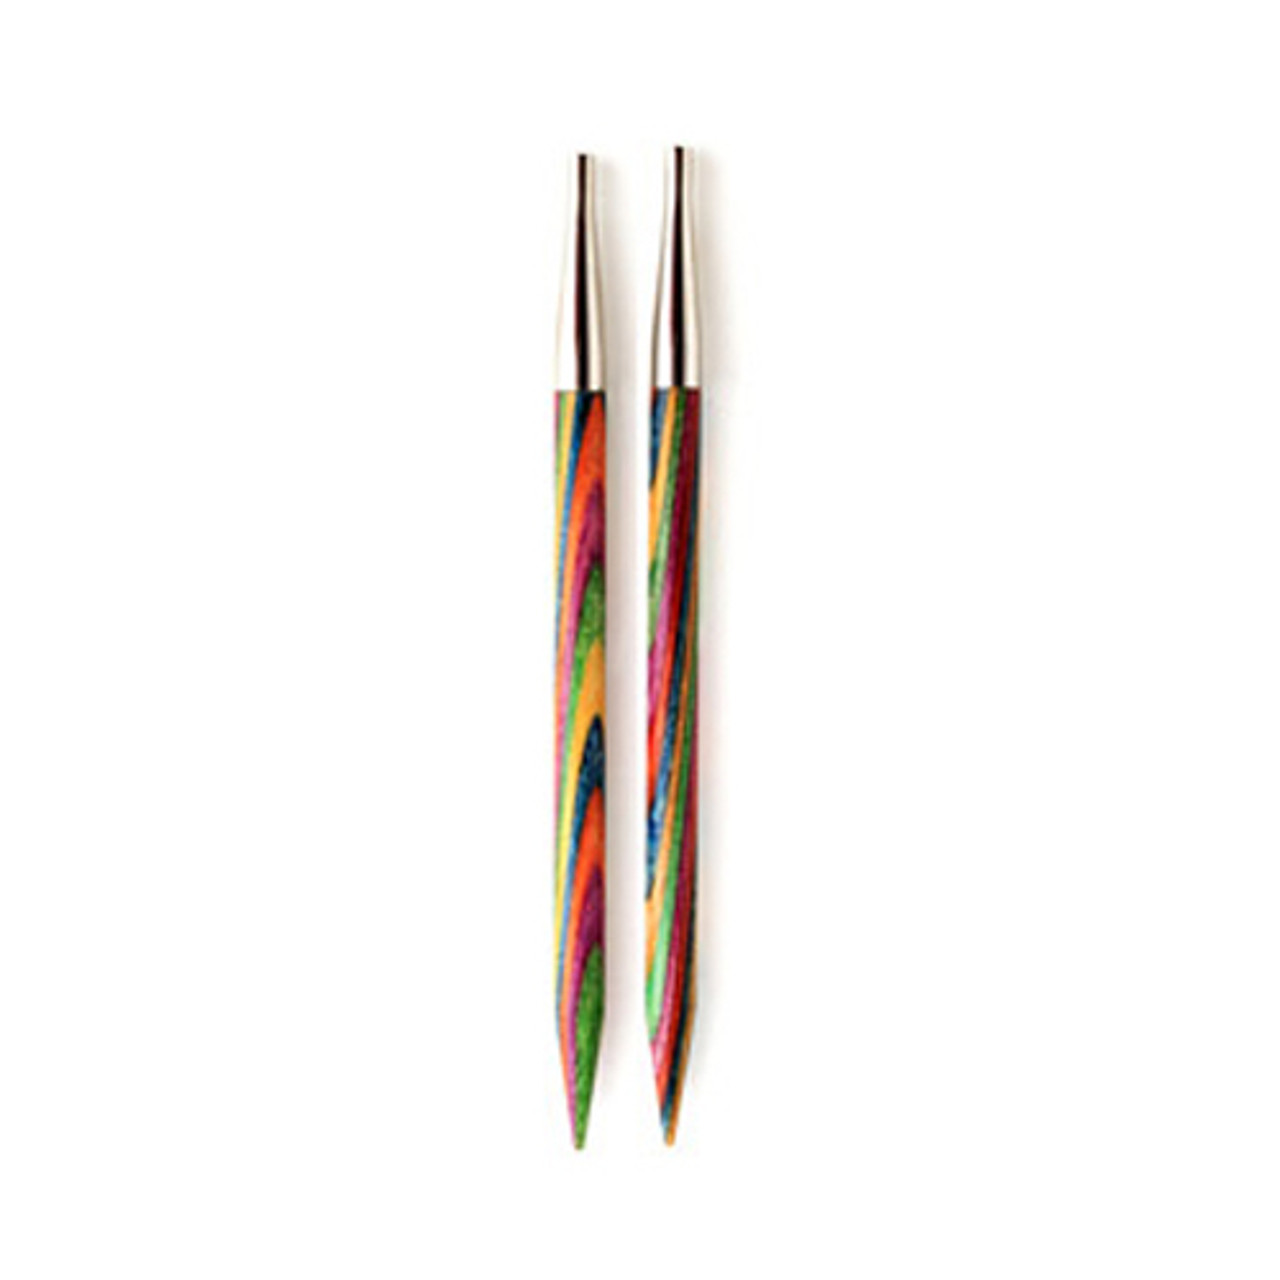 Knitpro Symfonie Interchangeable Needle Tips - sizes 6.00mm to 15.00mm - standard length